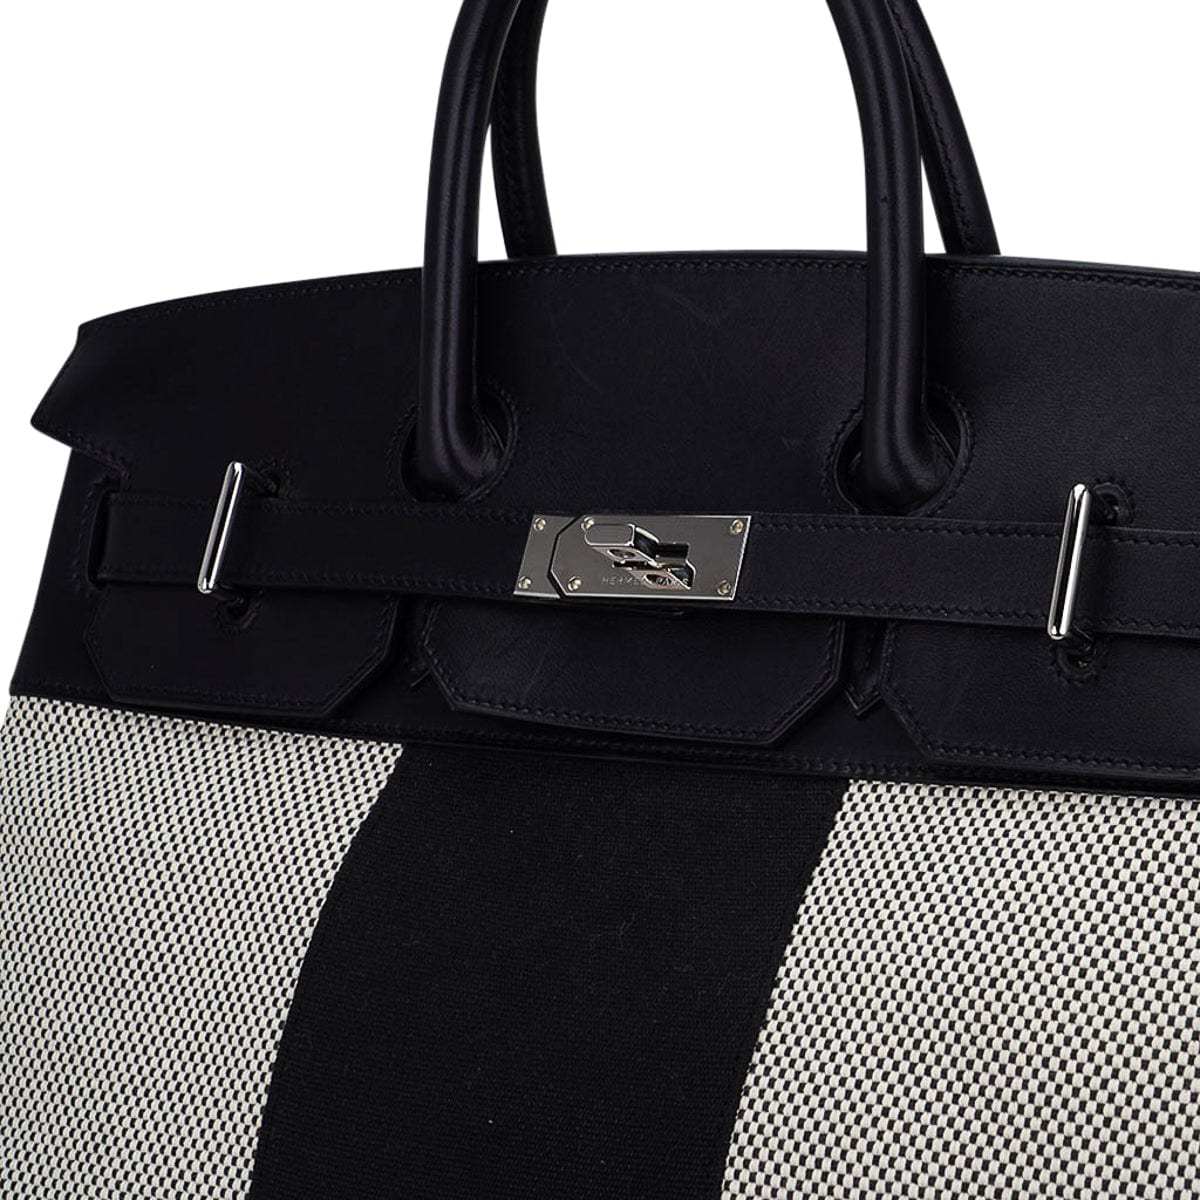 Hermès Haut à Courroies: The Original Birkin Bag, Handbags and Accessories